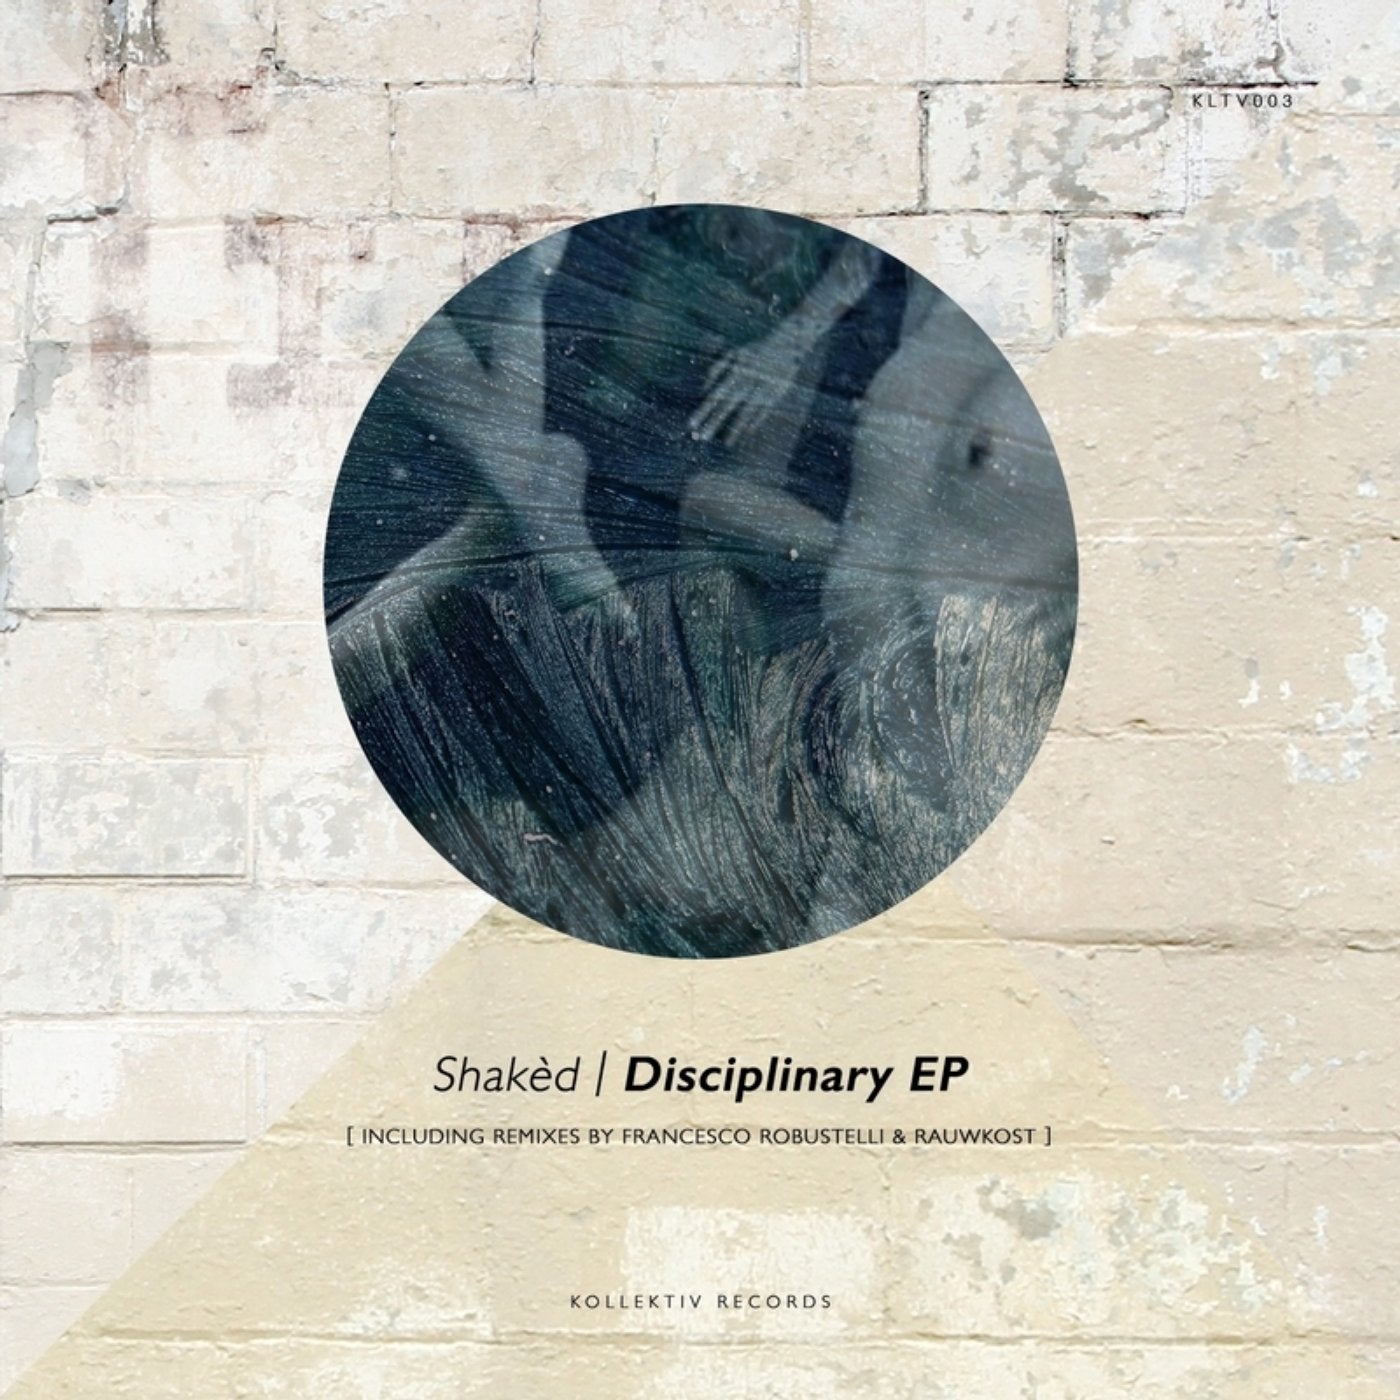 Disciplinary EP